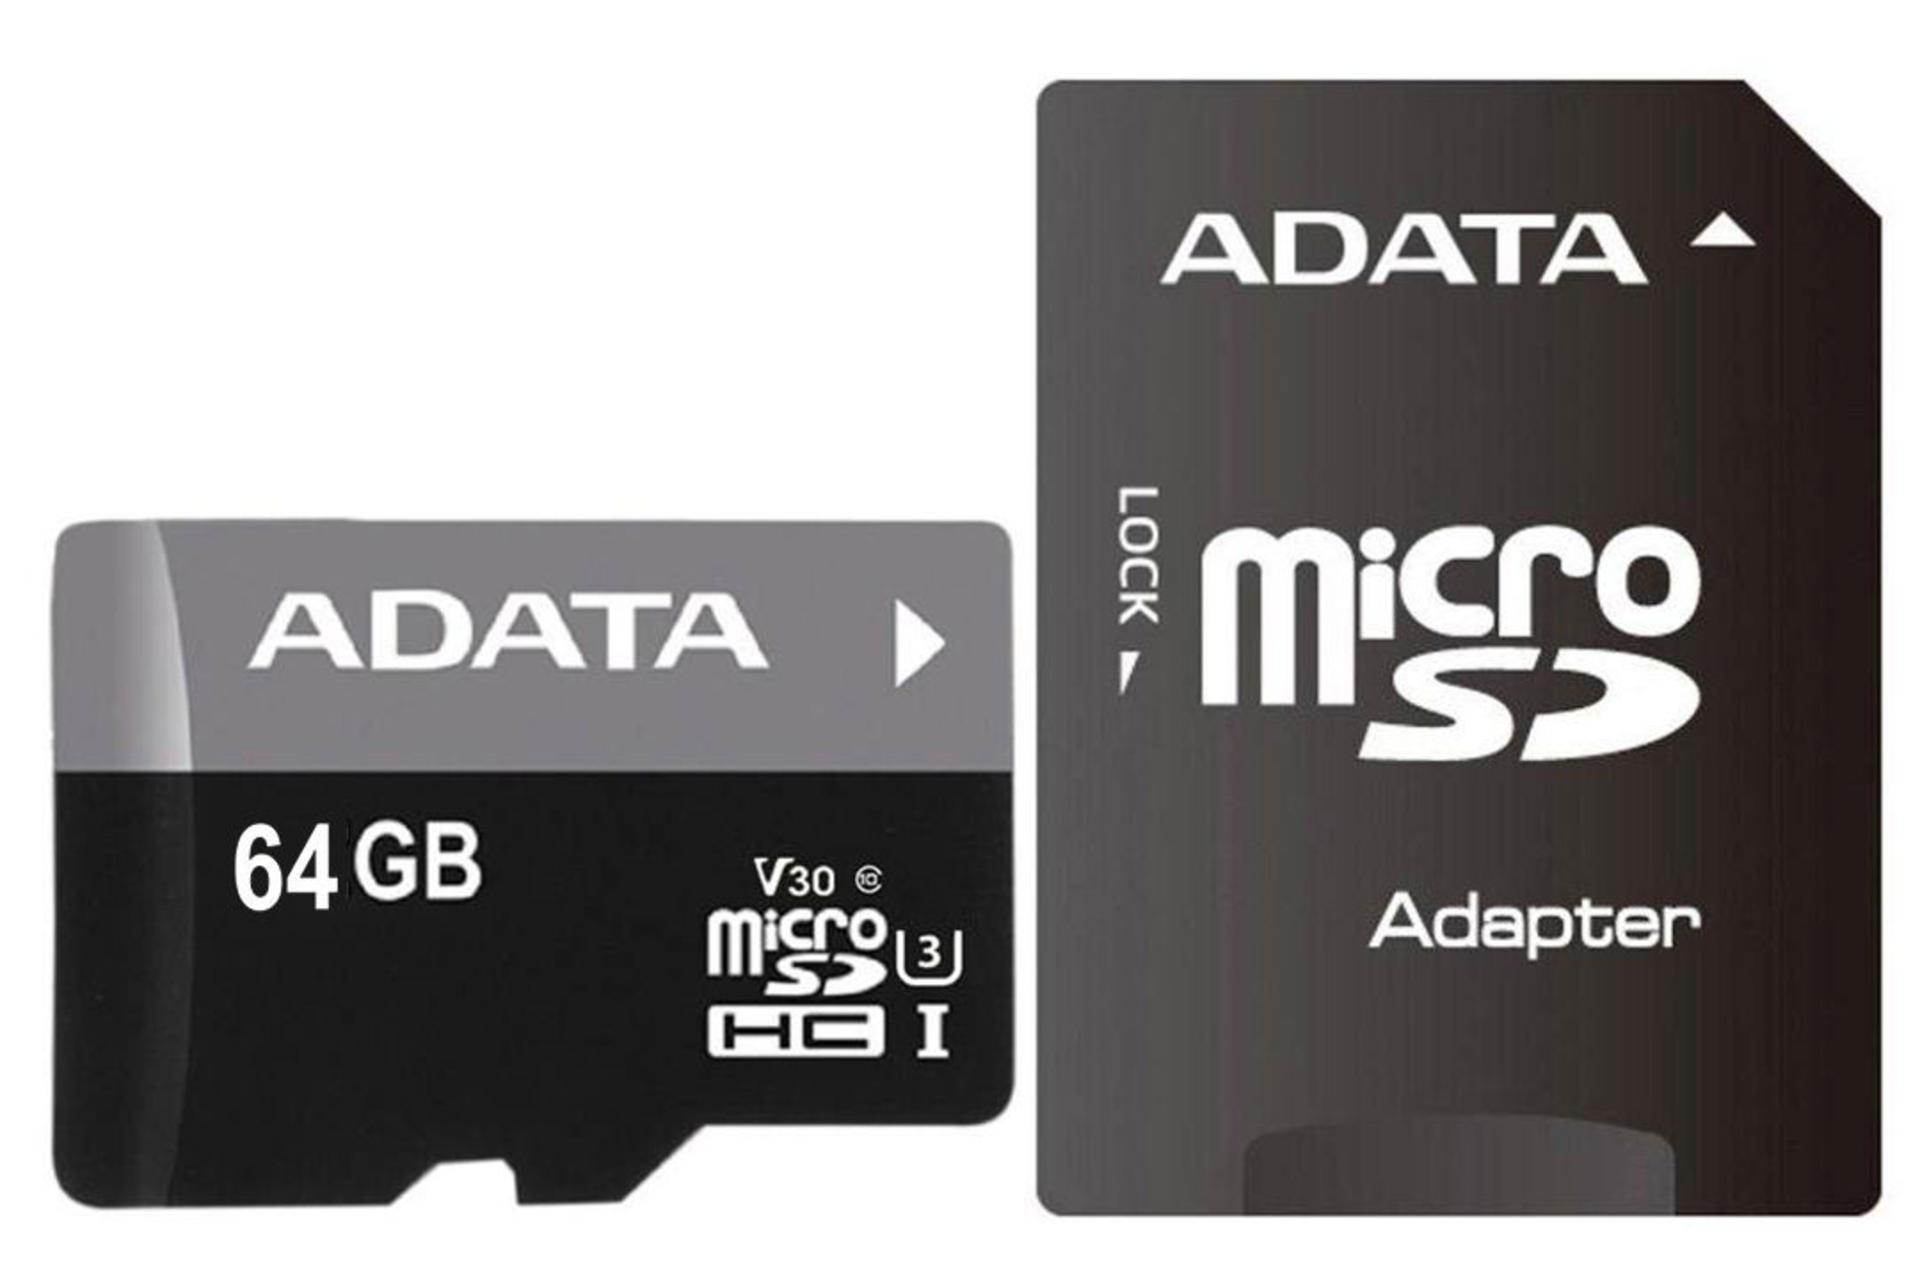 ADATA Premier Pro V30 microSDHC Class 10 UHS-I U3 64GB